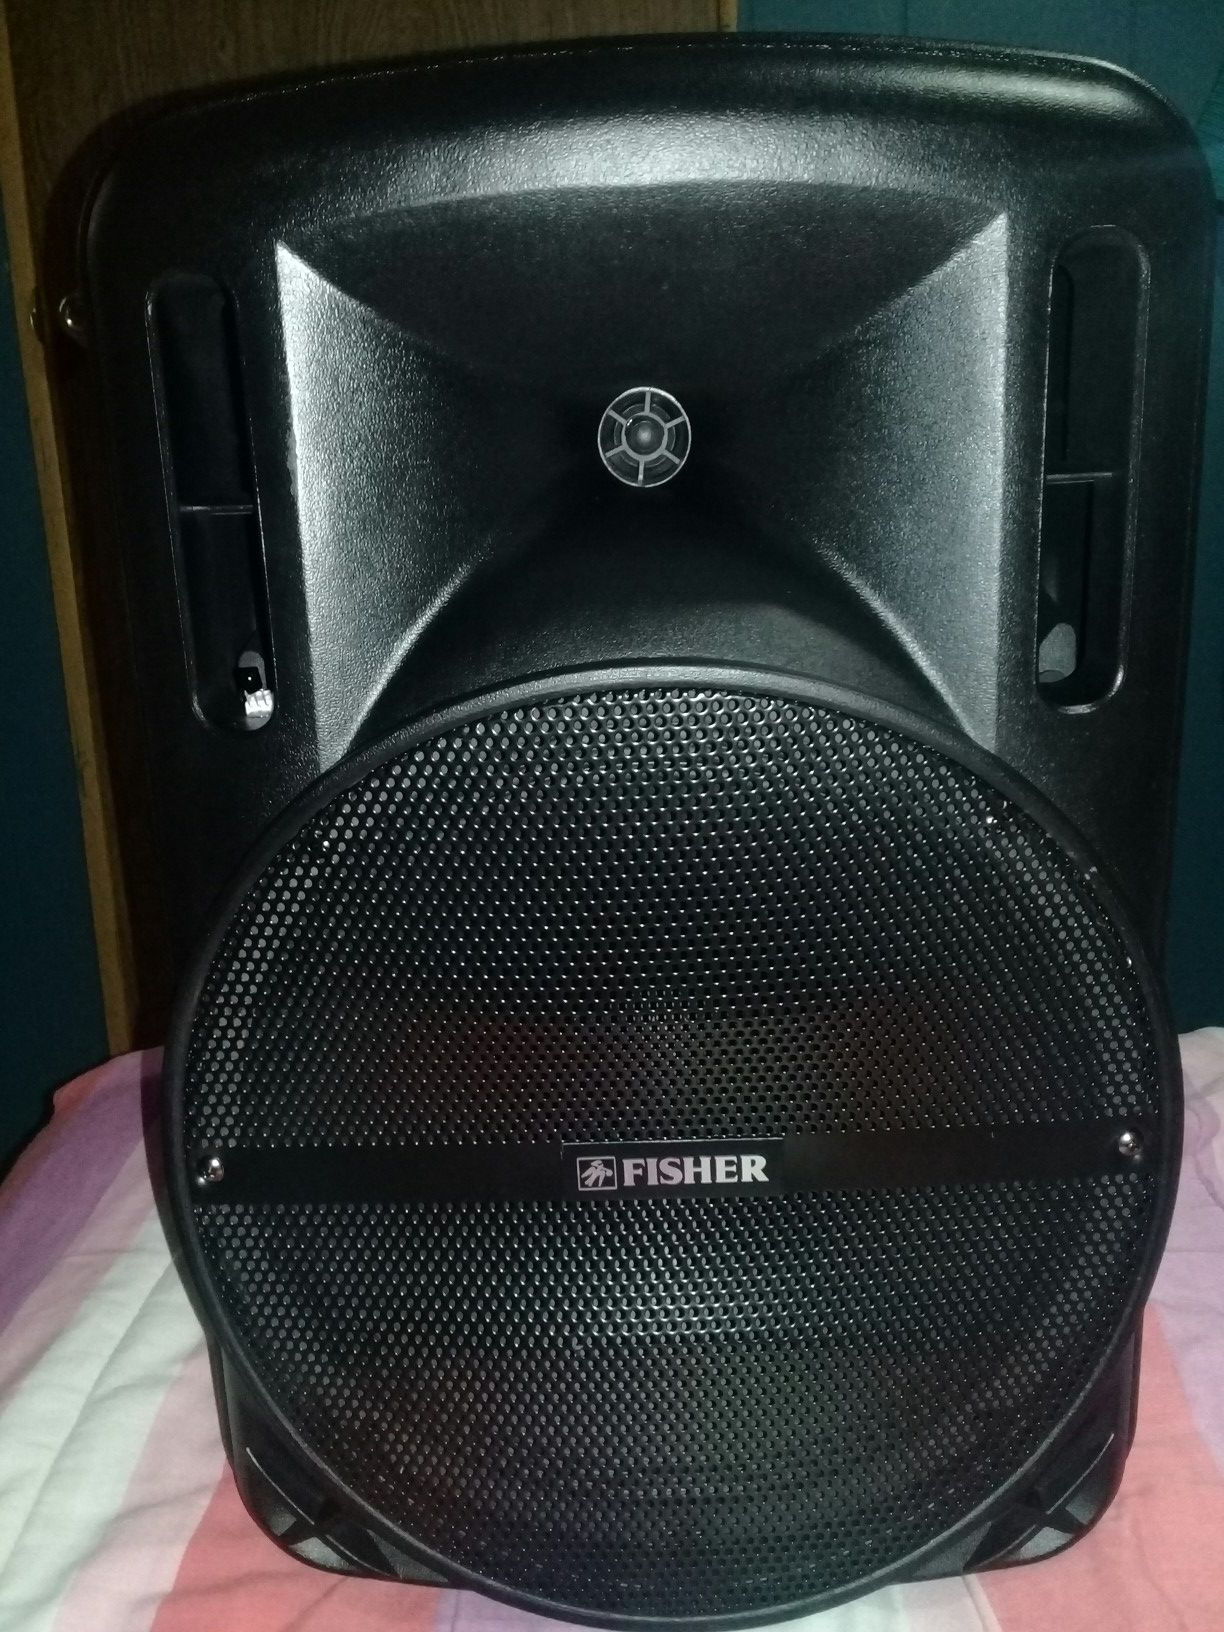 Fisher Speaker rechargable Bluetooth